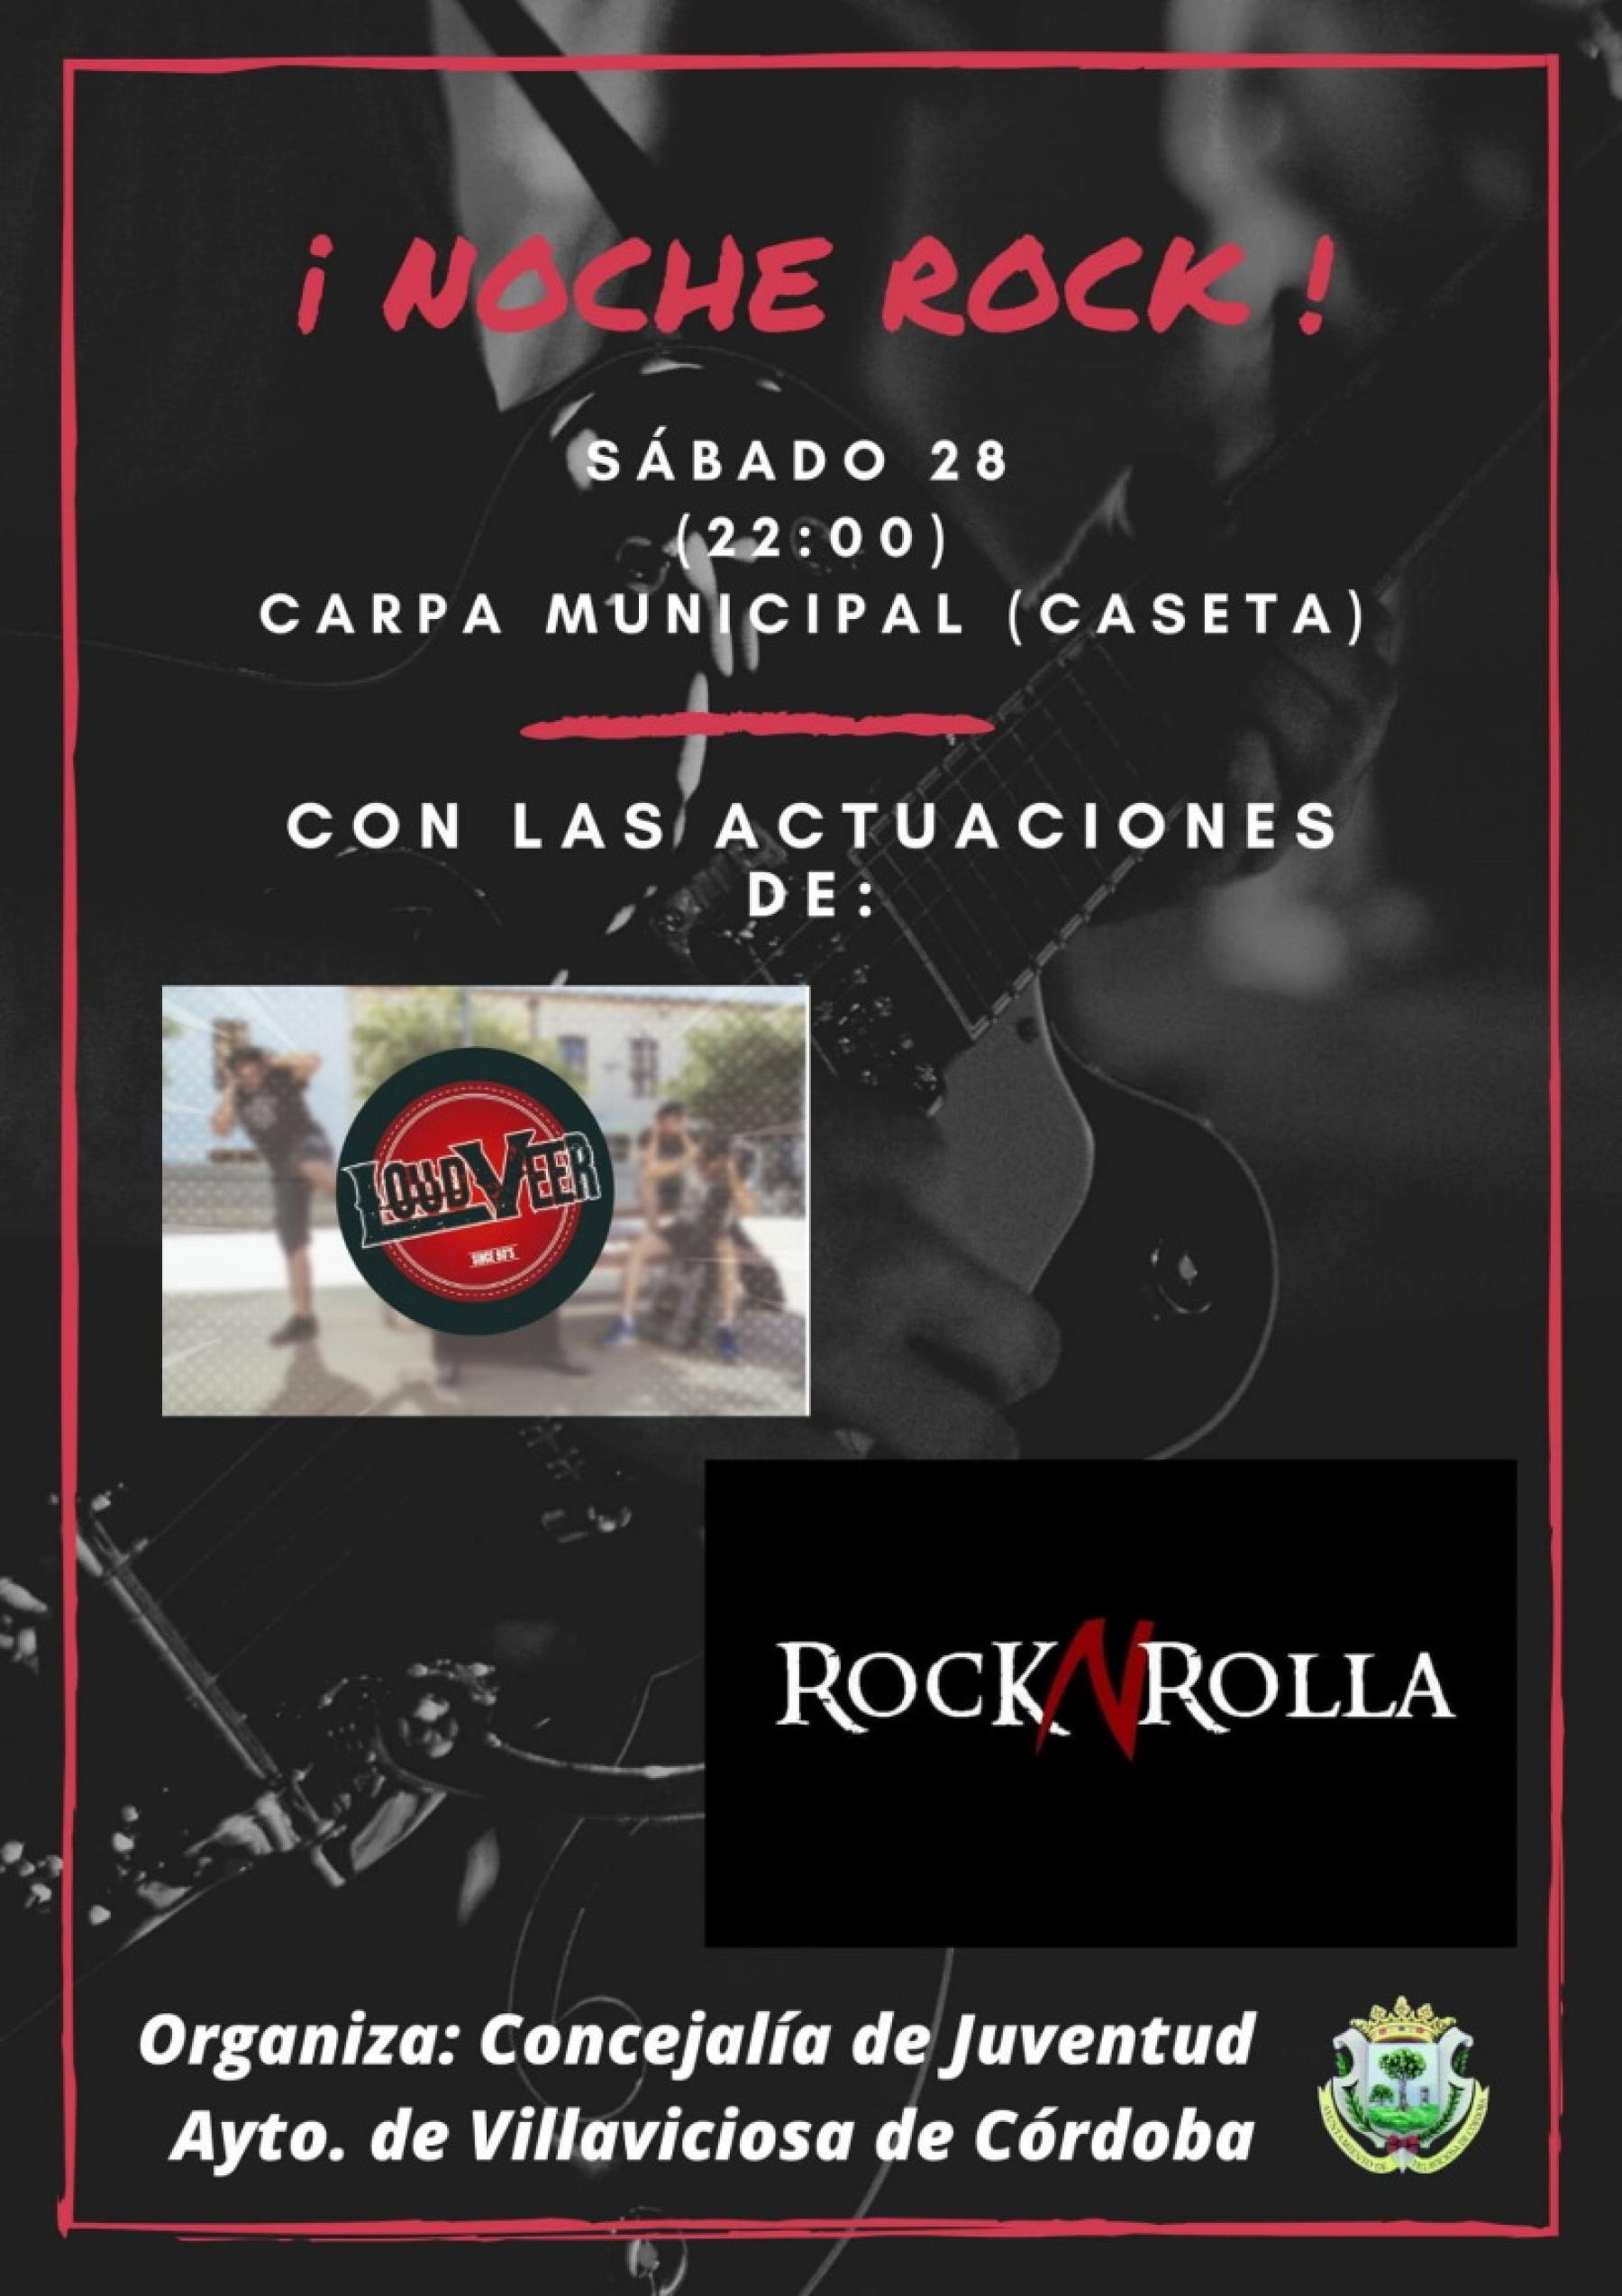 ¡NOCHE DE ROCK! Sábado 28 de Diciembre en Villaviciosa de Córdoba